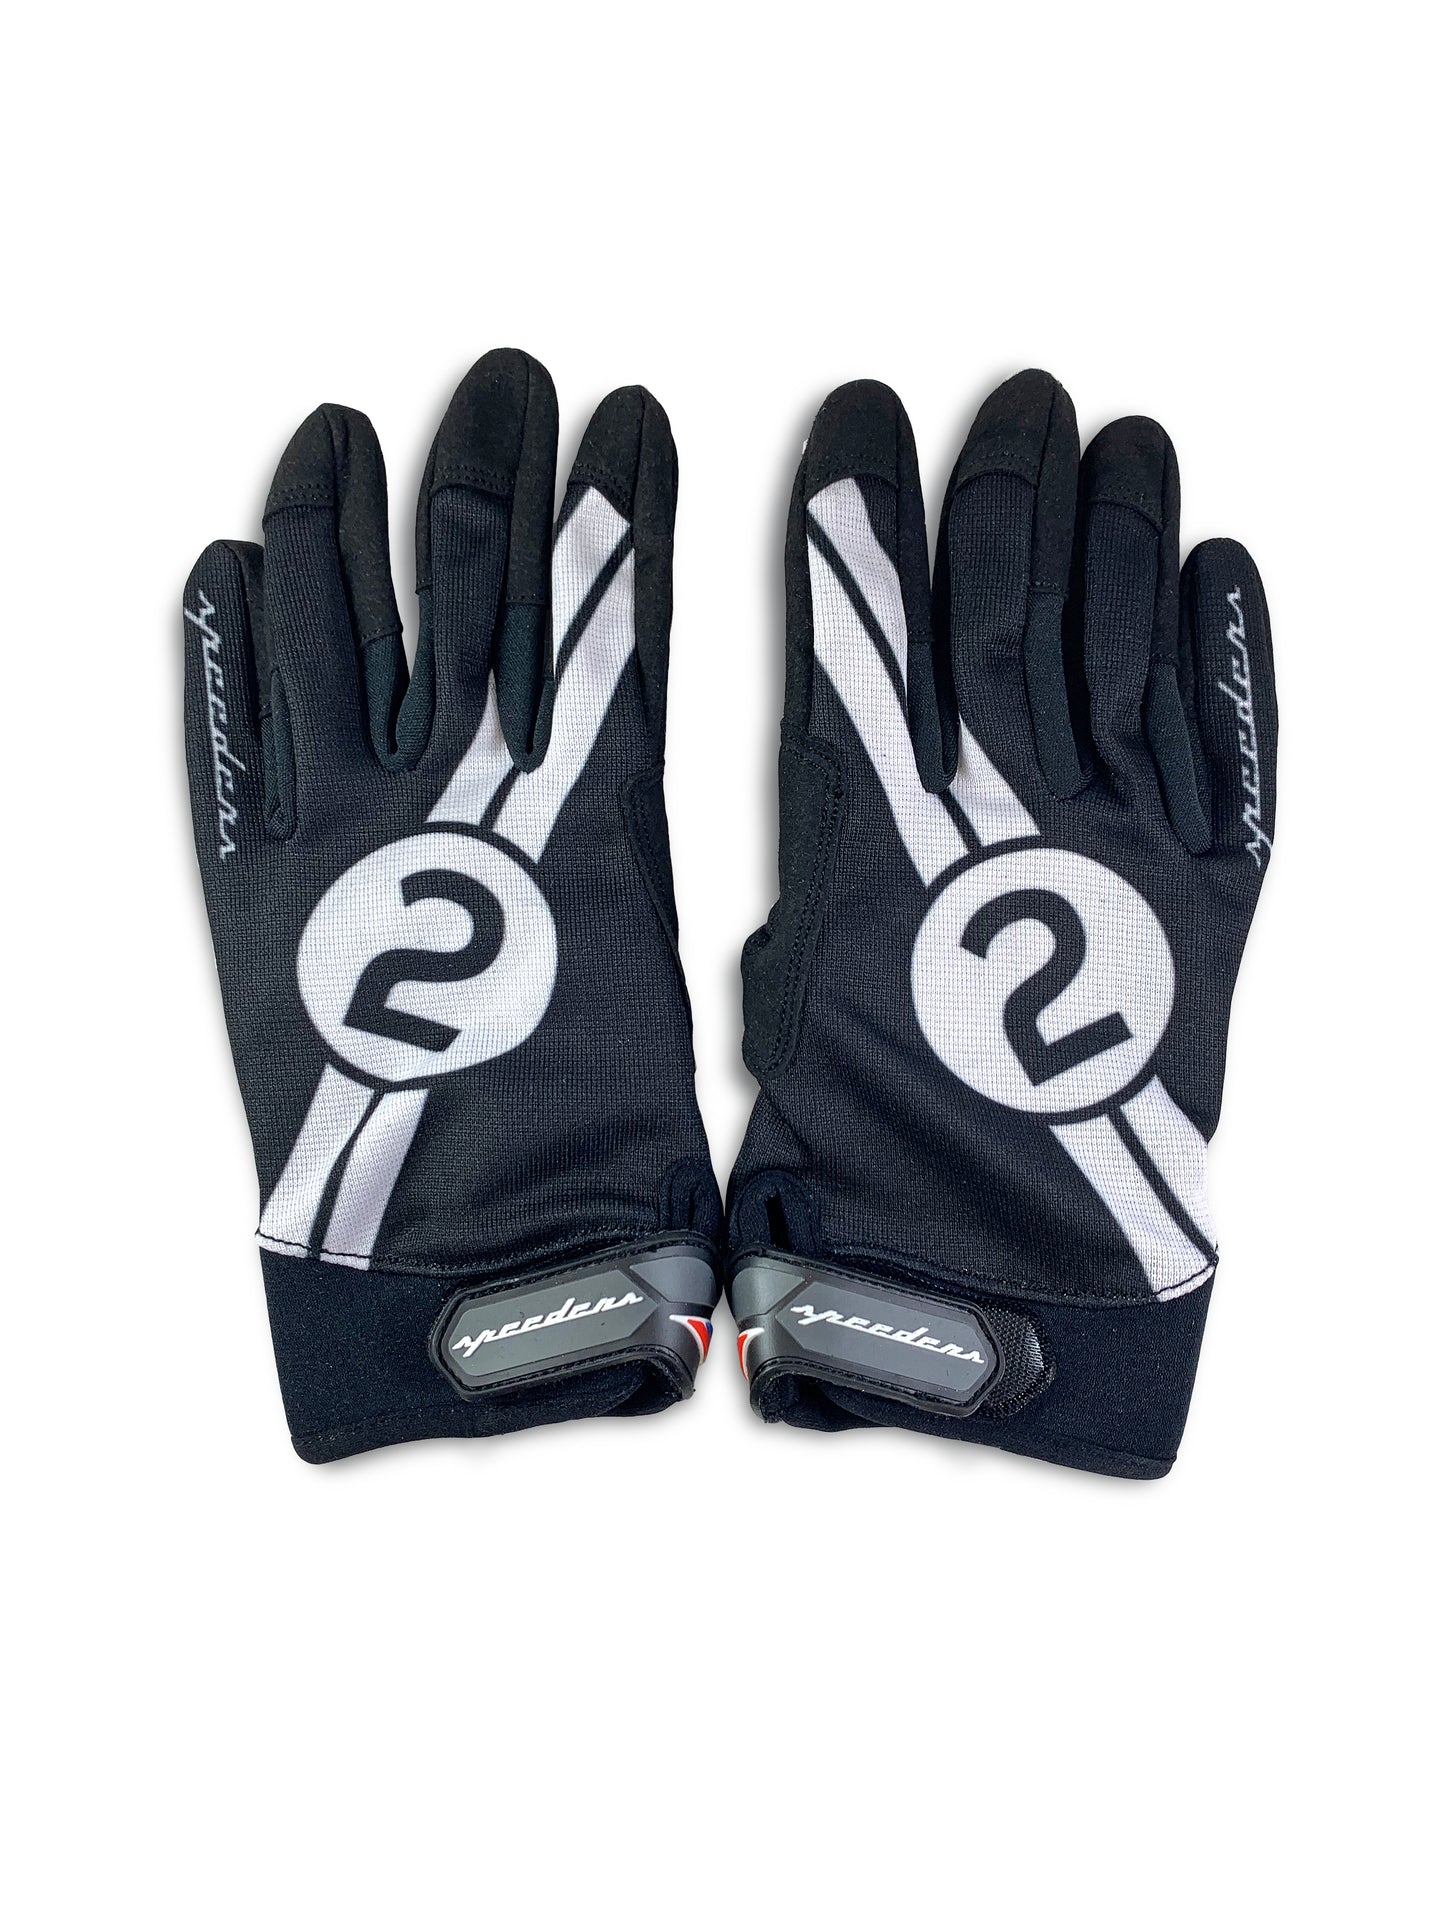 McLaren and Amon Mechanic Gloves